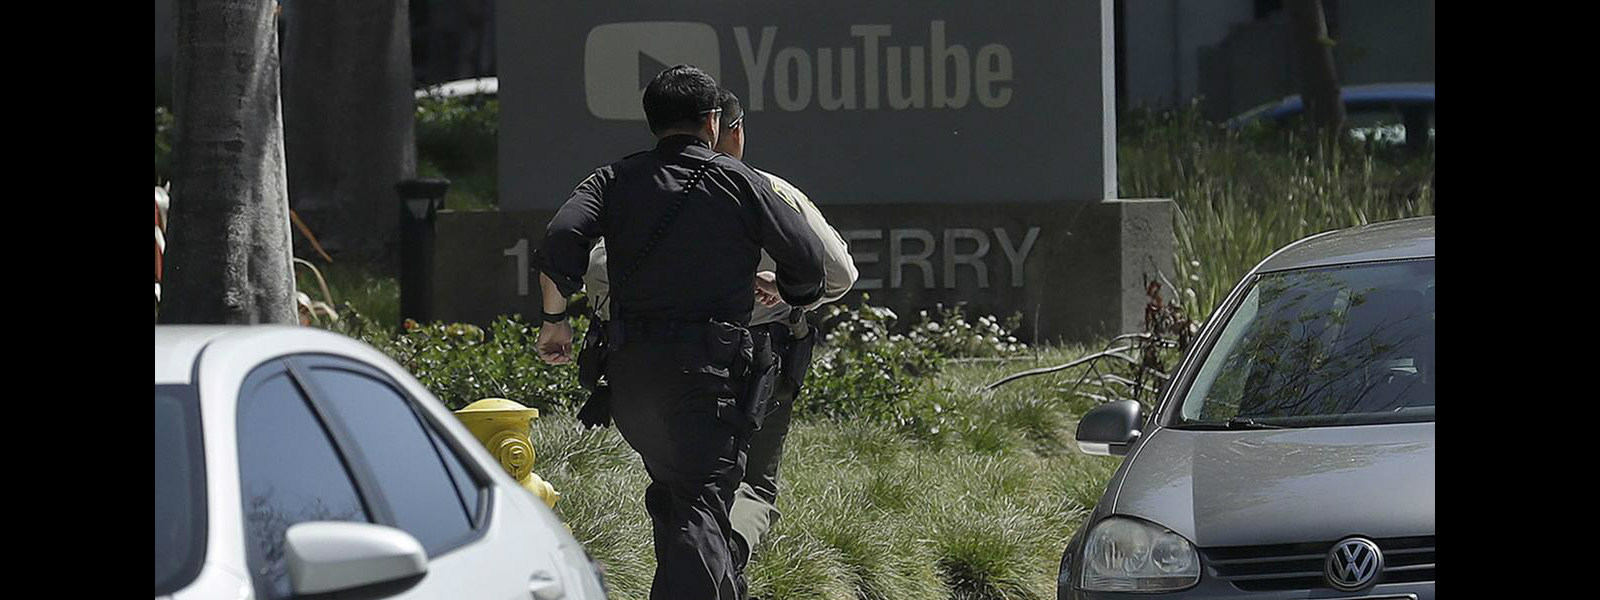 Three shot at YouTube HQ, female suspect dead